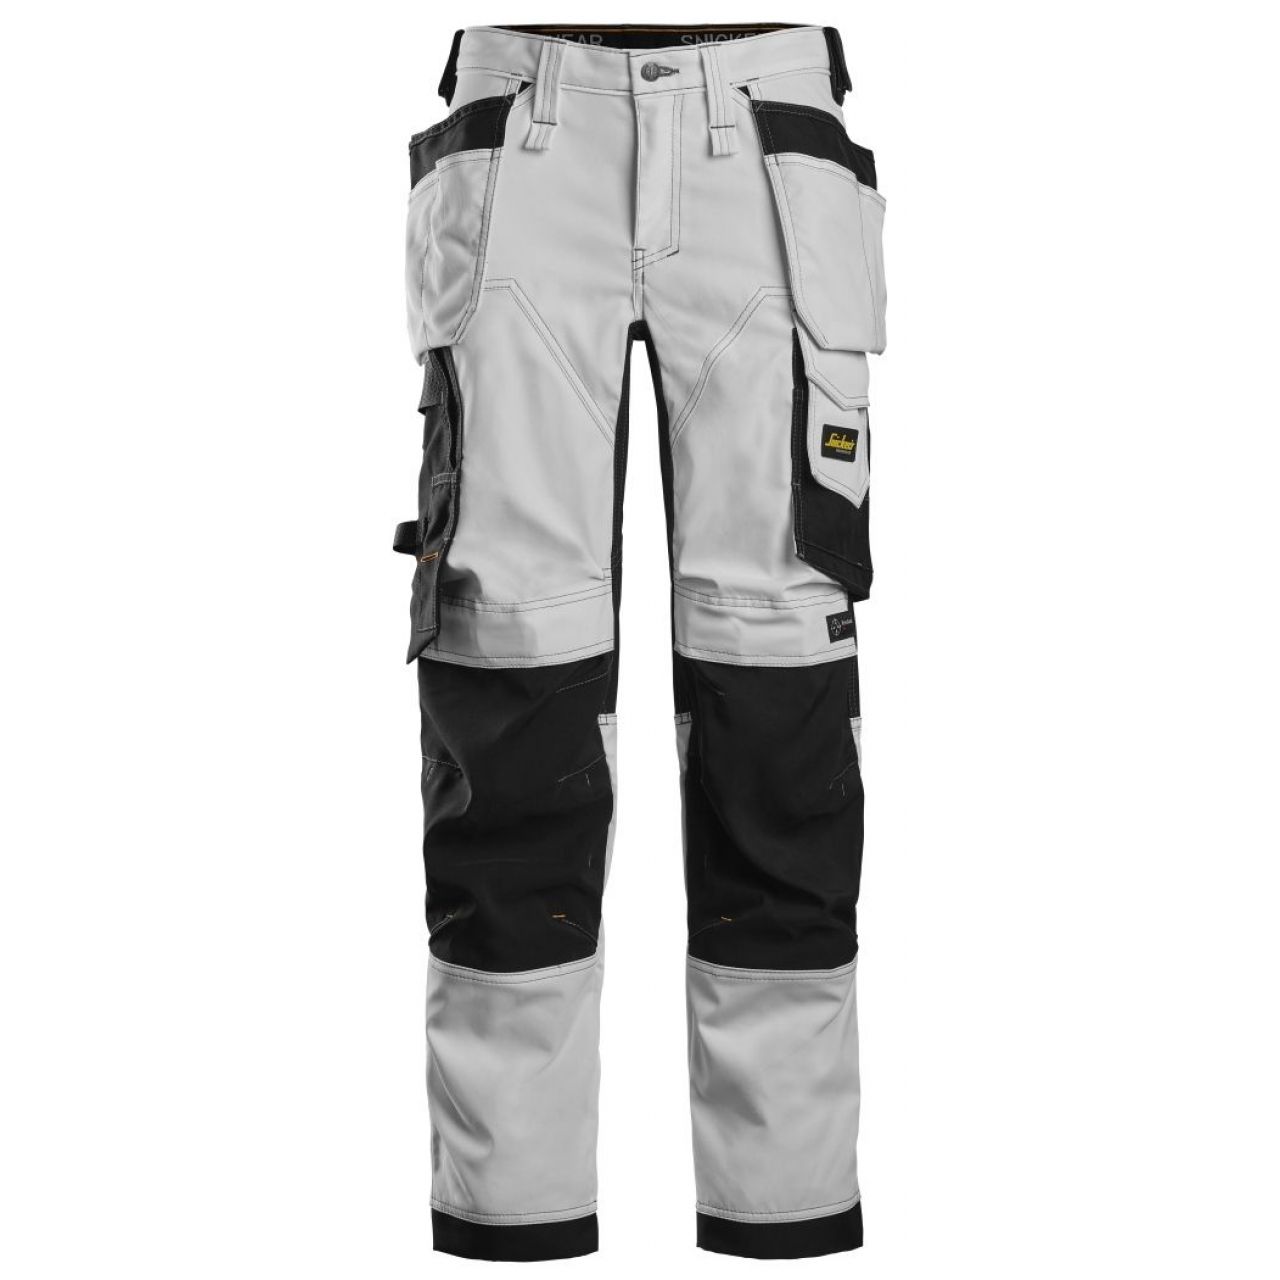 Pantalon elastico mujer bolsillos flotantes AllroundWork blanco-negro talla 054